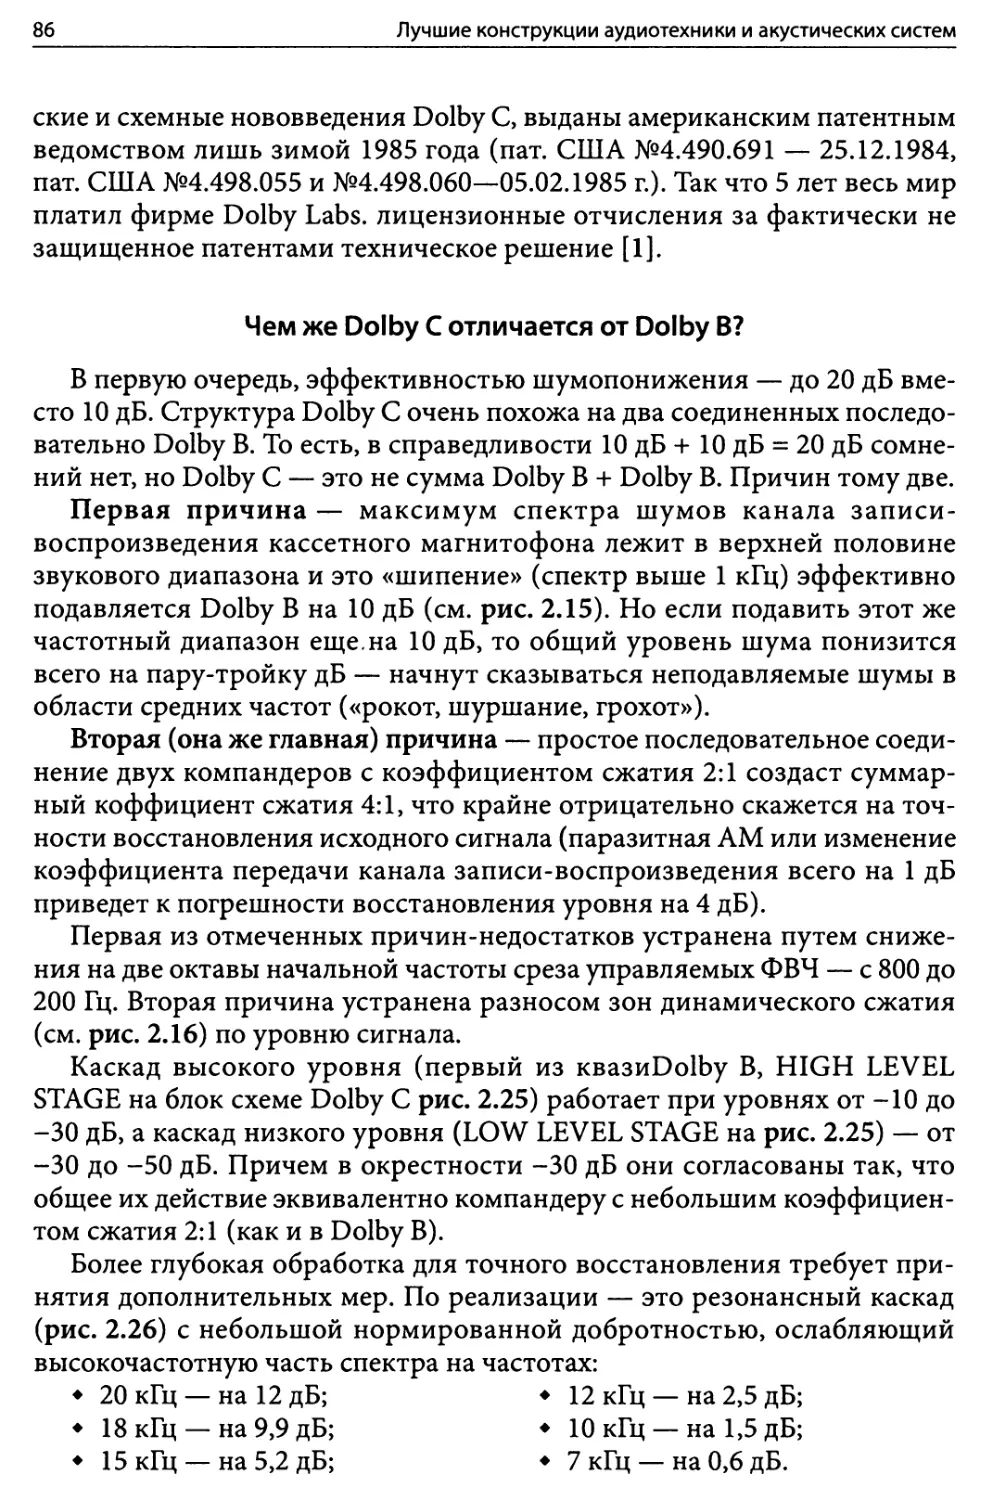 Чем же Dolby C отличается от Dolby B?